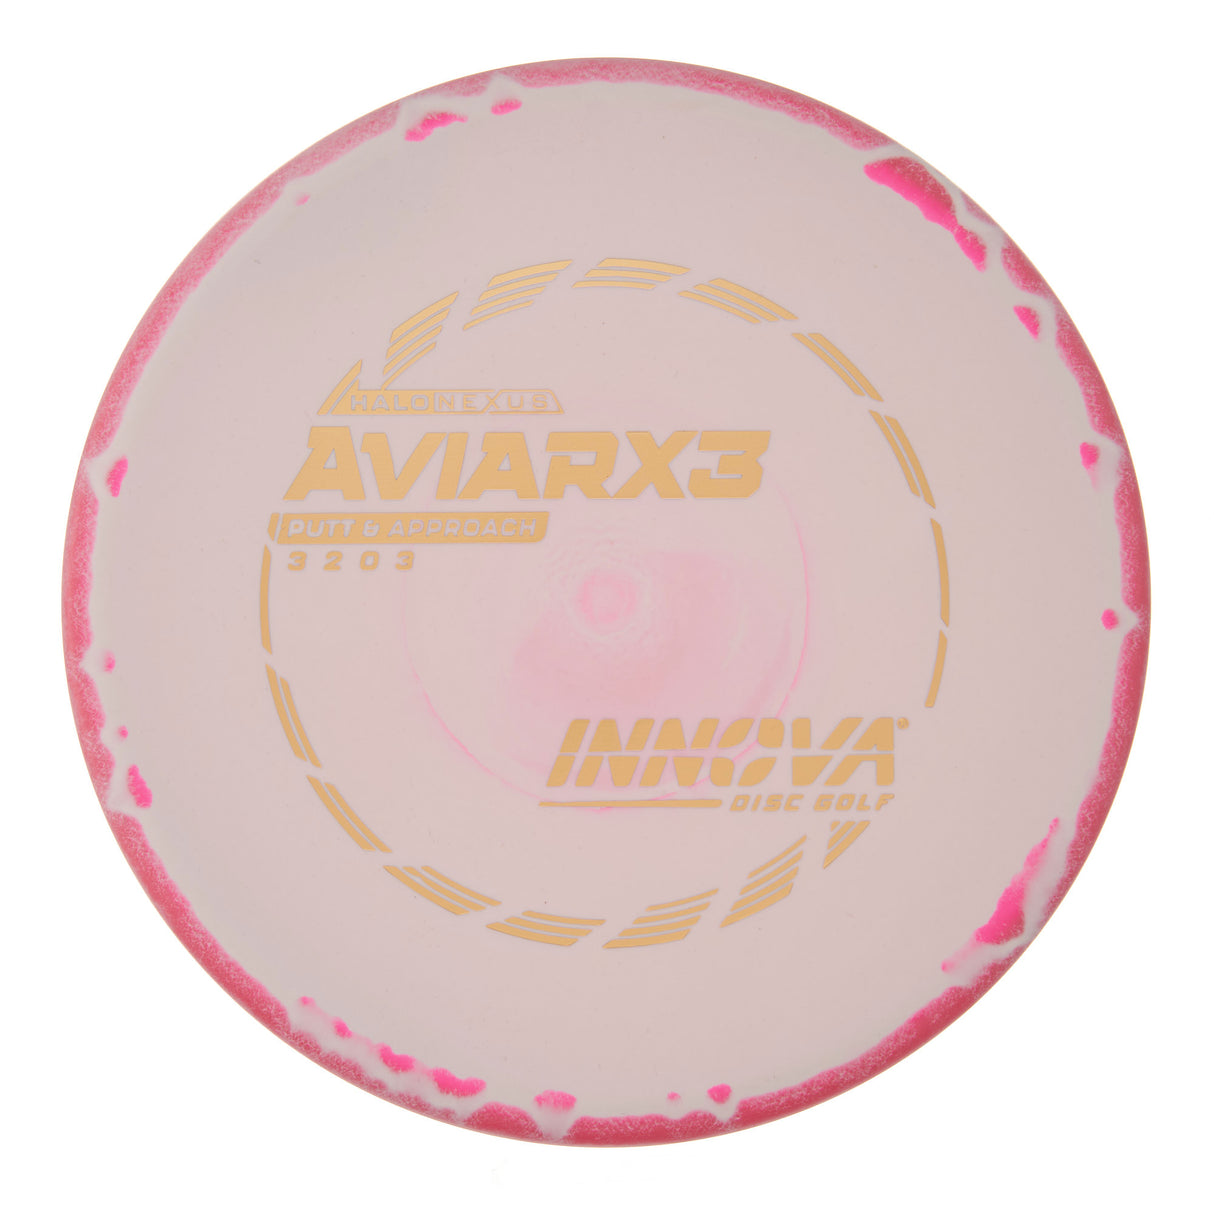 Innova AviarX3 - Halo Nexus 176g | Style 0001